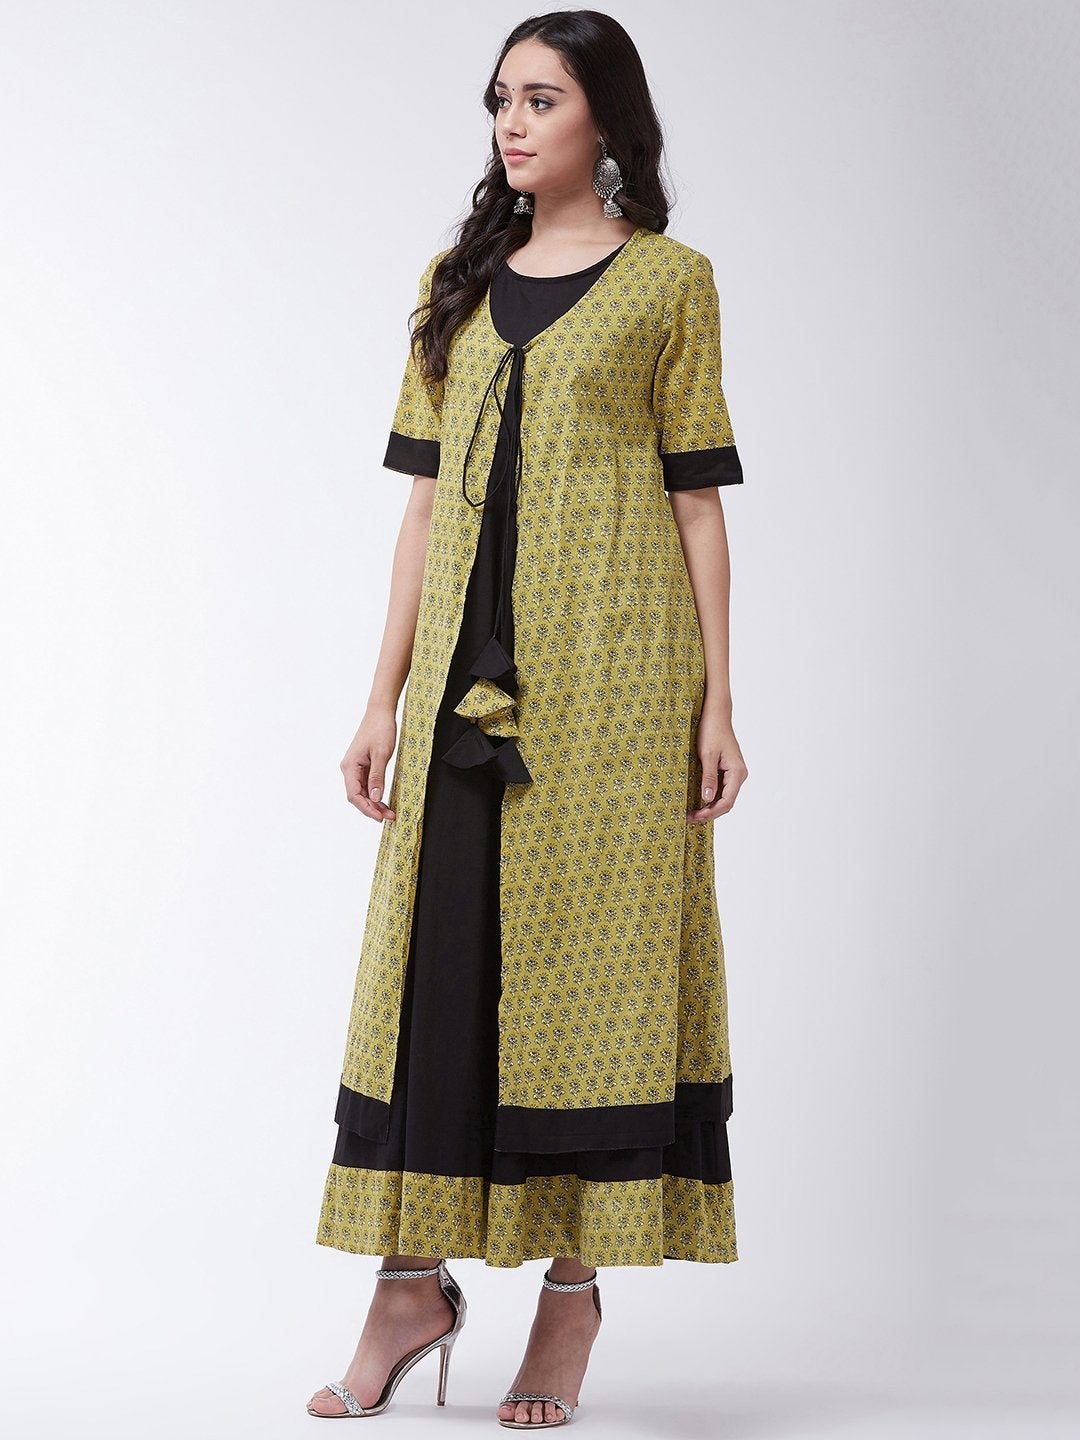 Women's Black Anarkali Dress With Yellow Floral Print Jacket - InWeave